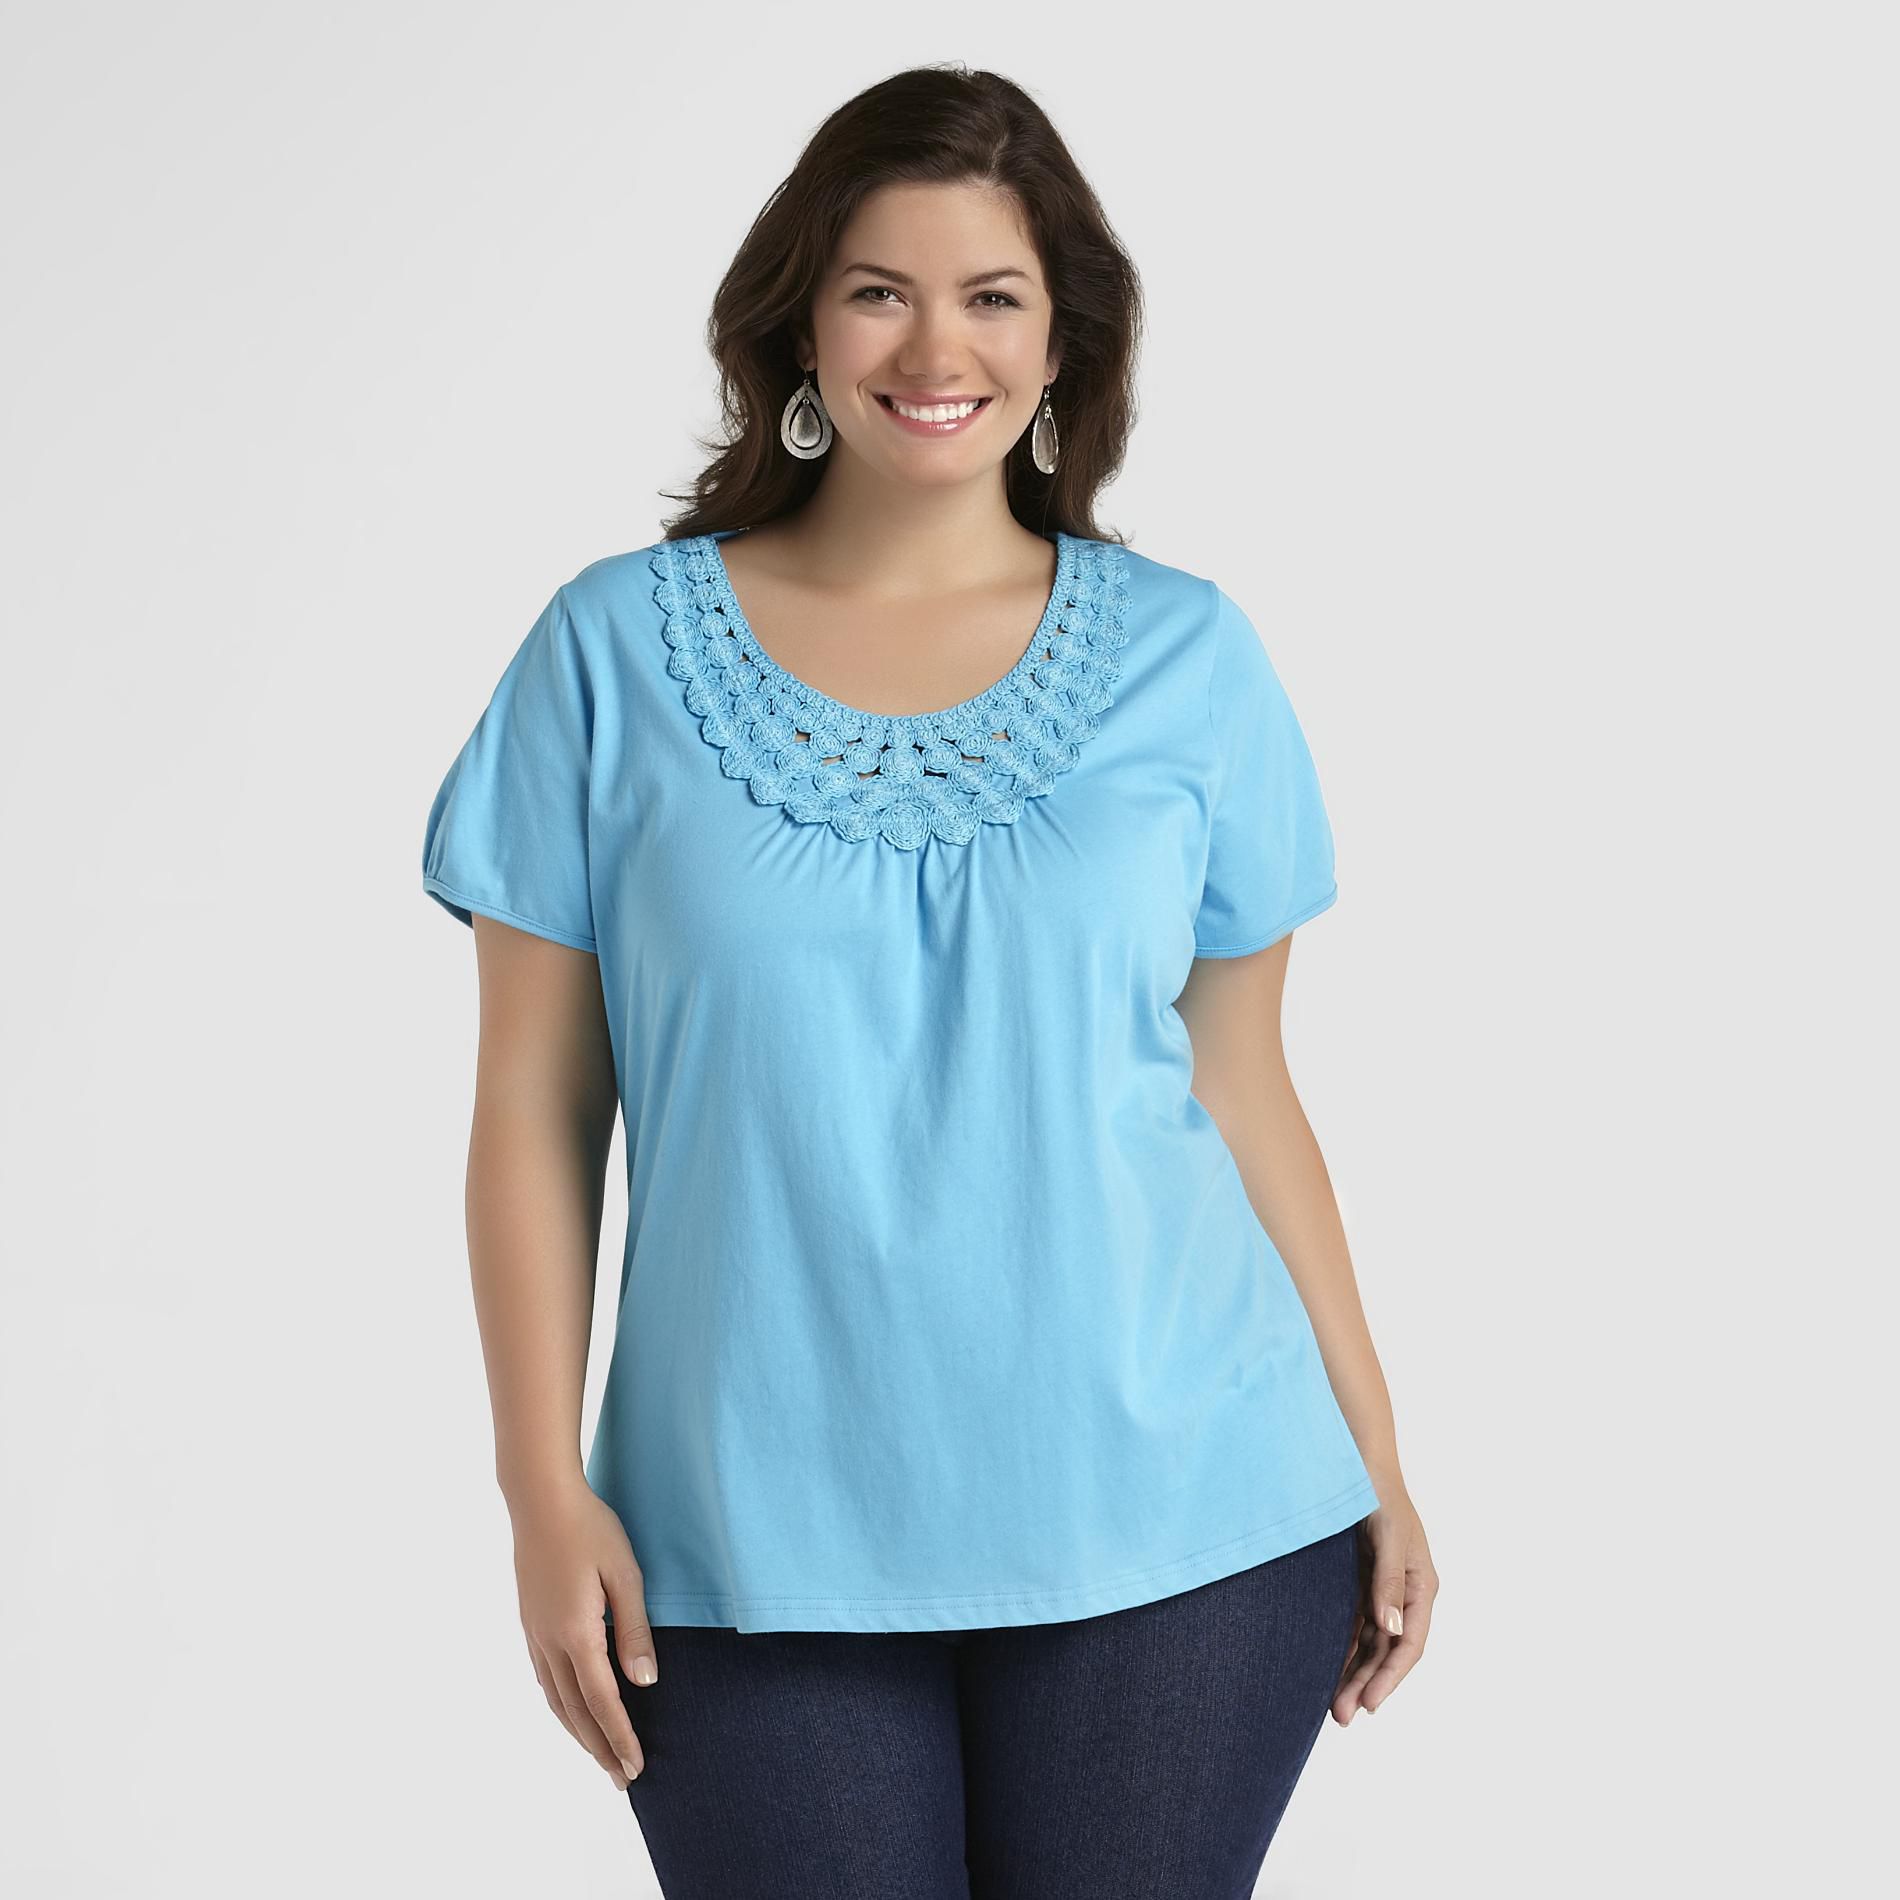 Basic Editions Women's Plus Crocheted T-Shirt